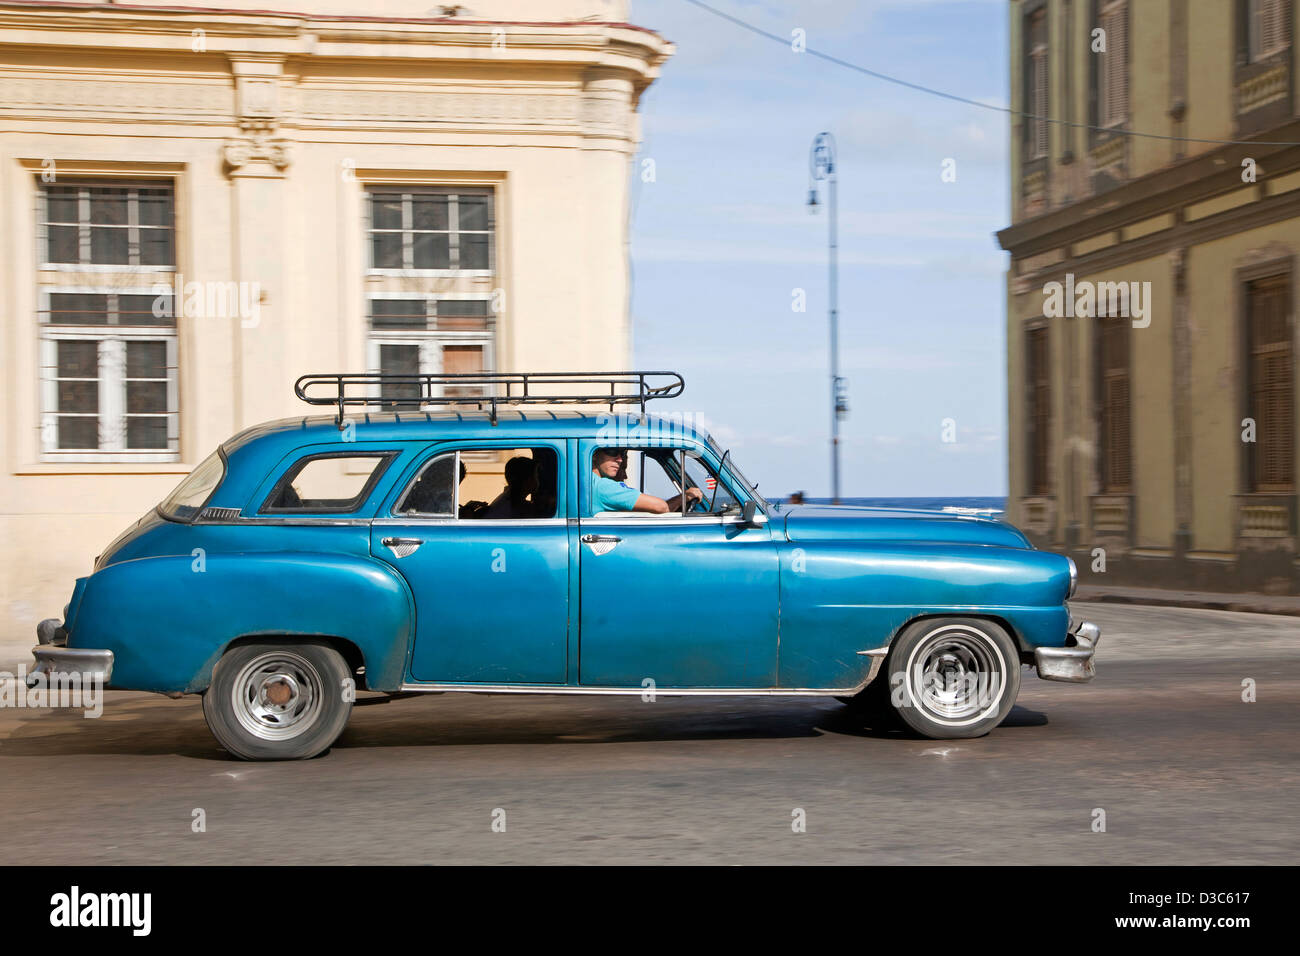 Blue old 1950s vintage American car / Yank tank in Havana, Cuba, Caribbean Stock Photo